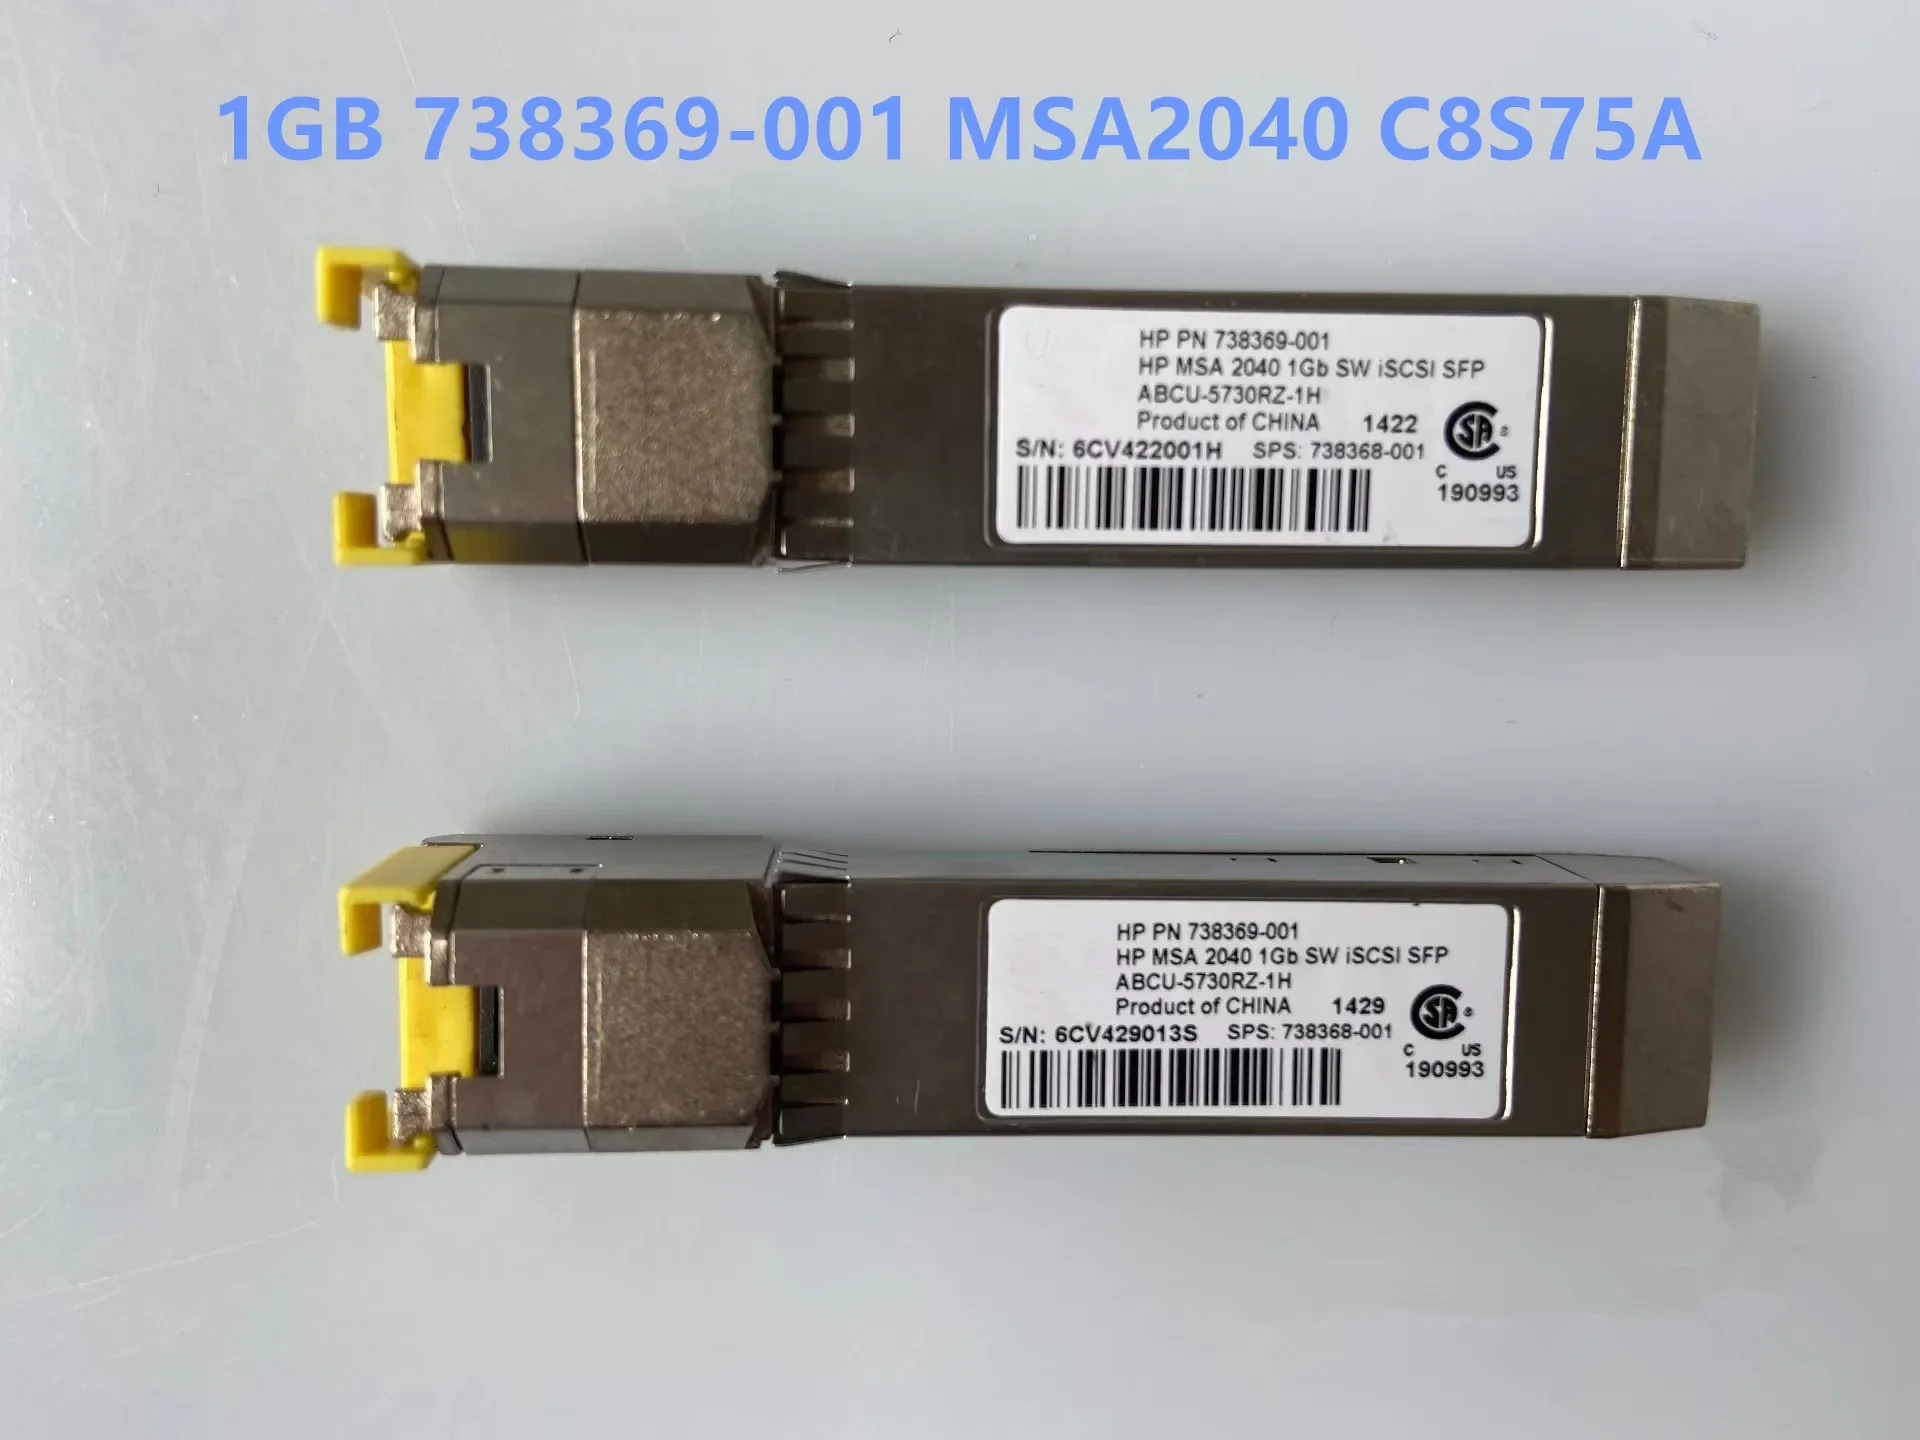 

H-Pe MSA 1GB Module 738369-001 ABCU-5730RZ-1H MSA2040 C8S75A/MSA 1GB SW ISCSI SFP RJ45 Switch Network Transceiver